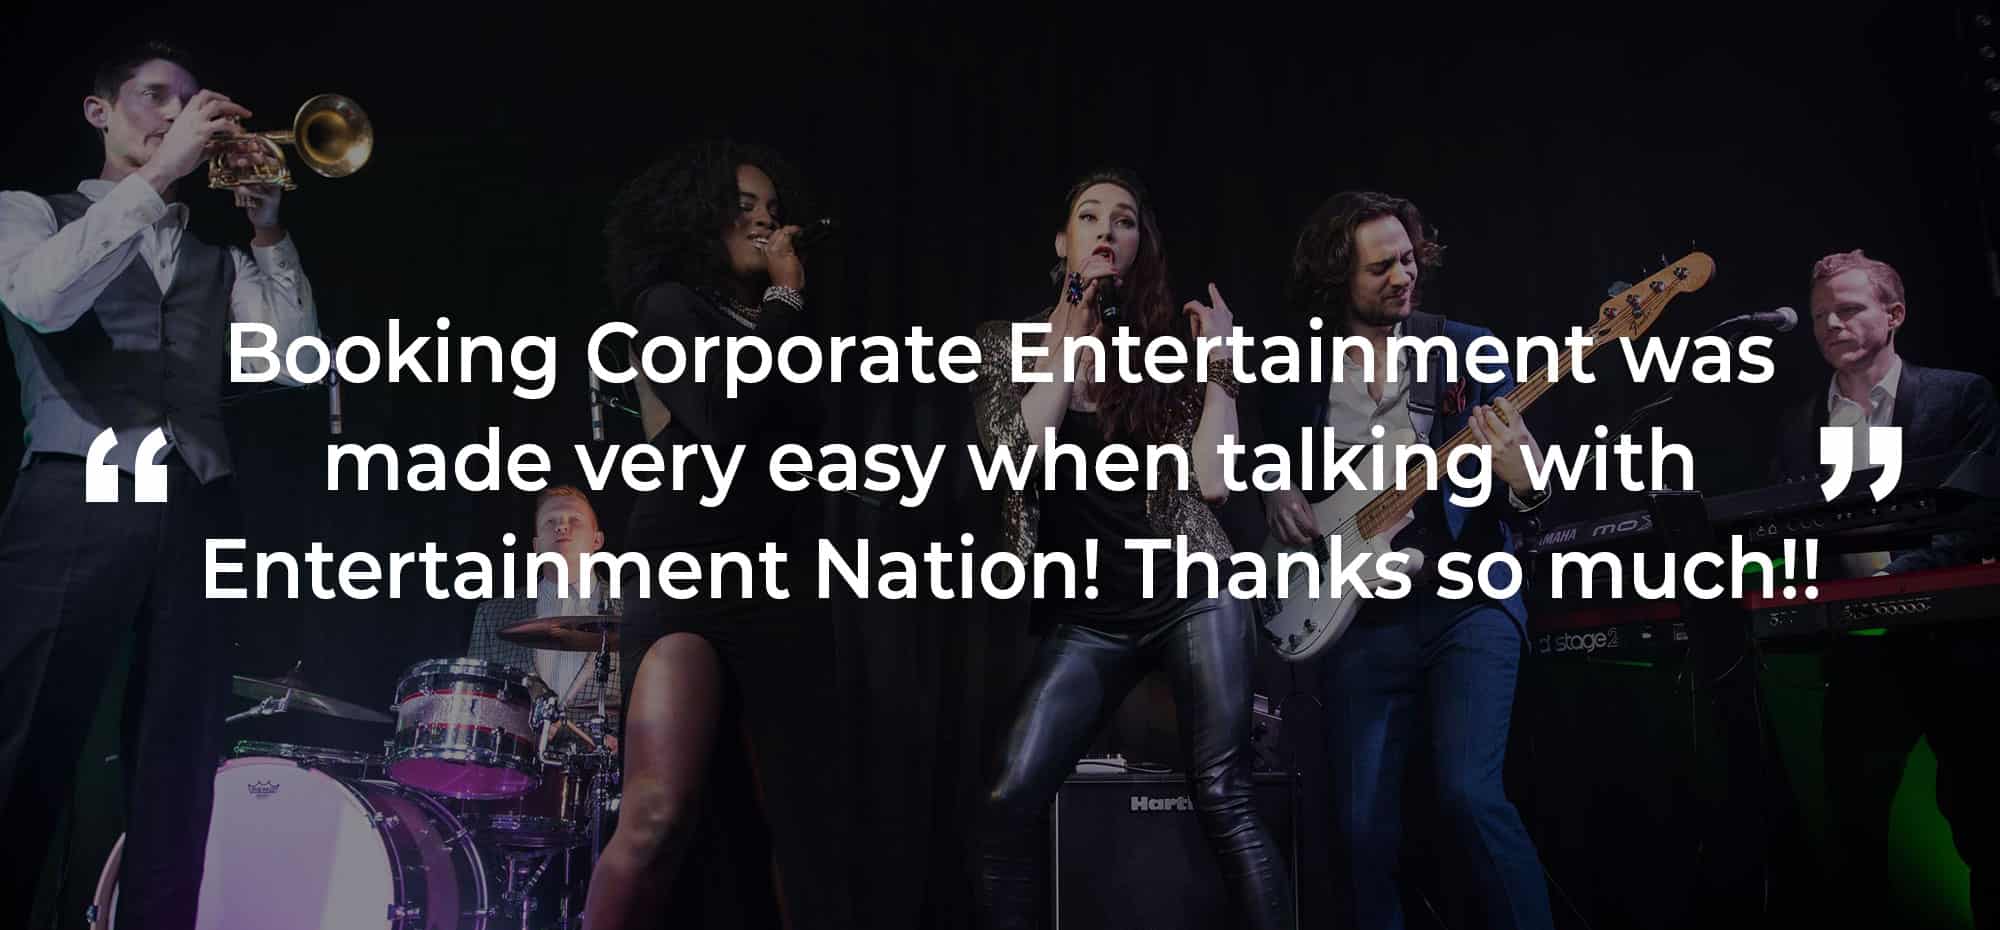 Client Review of Corporate Entertainment Surrey